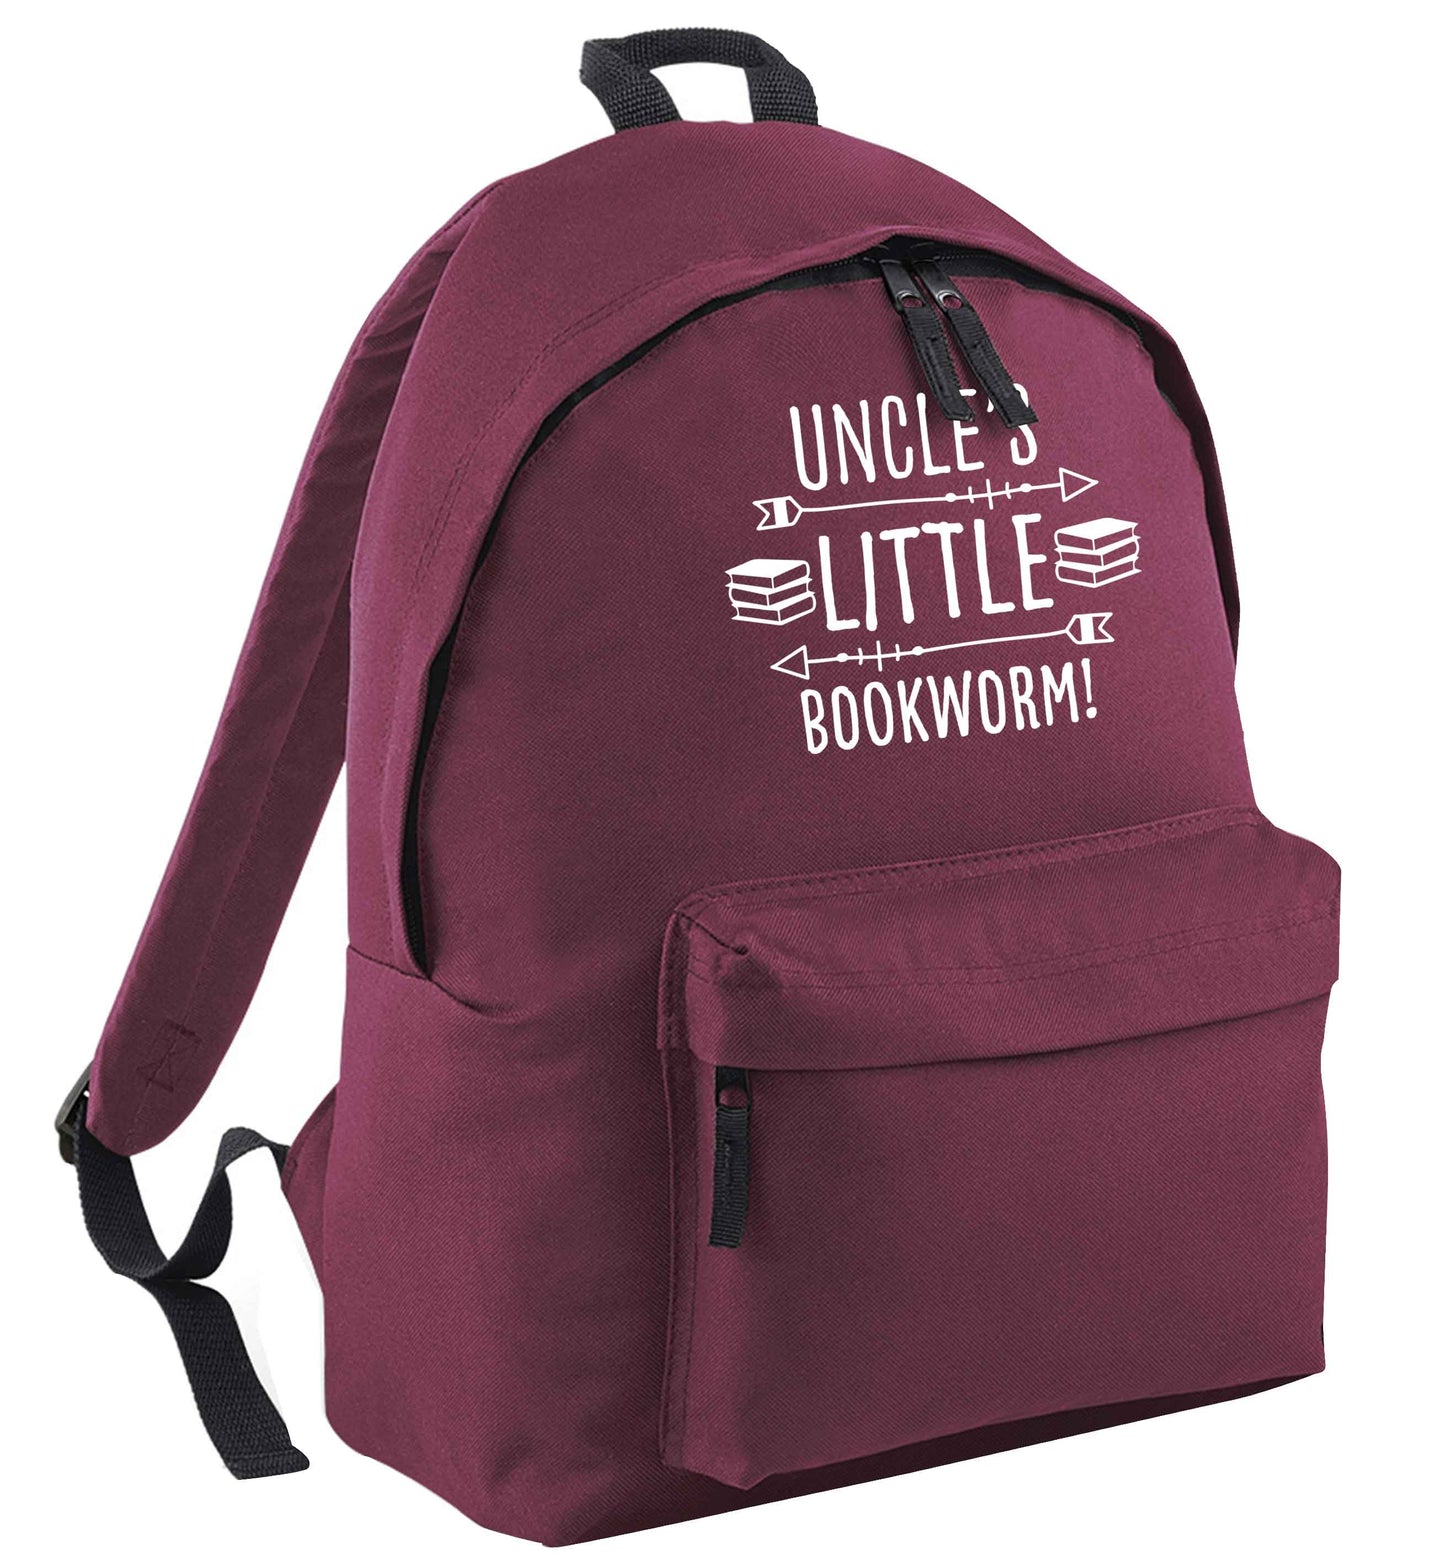 Uncle's little bookworm | Children's backpack